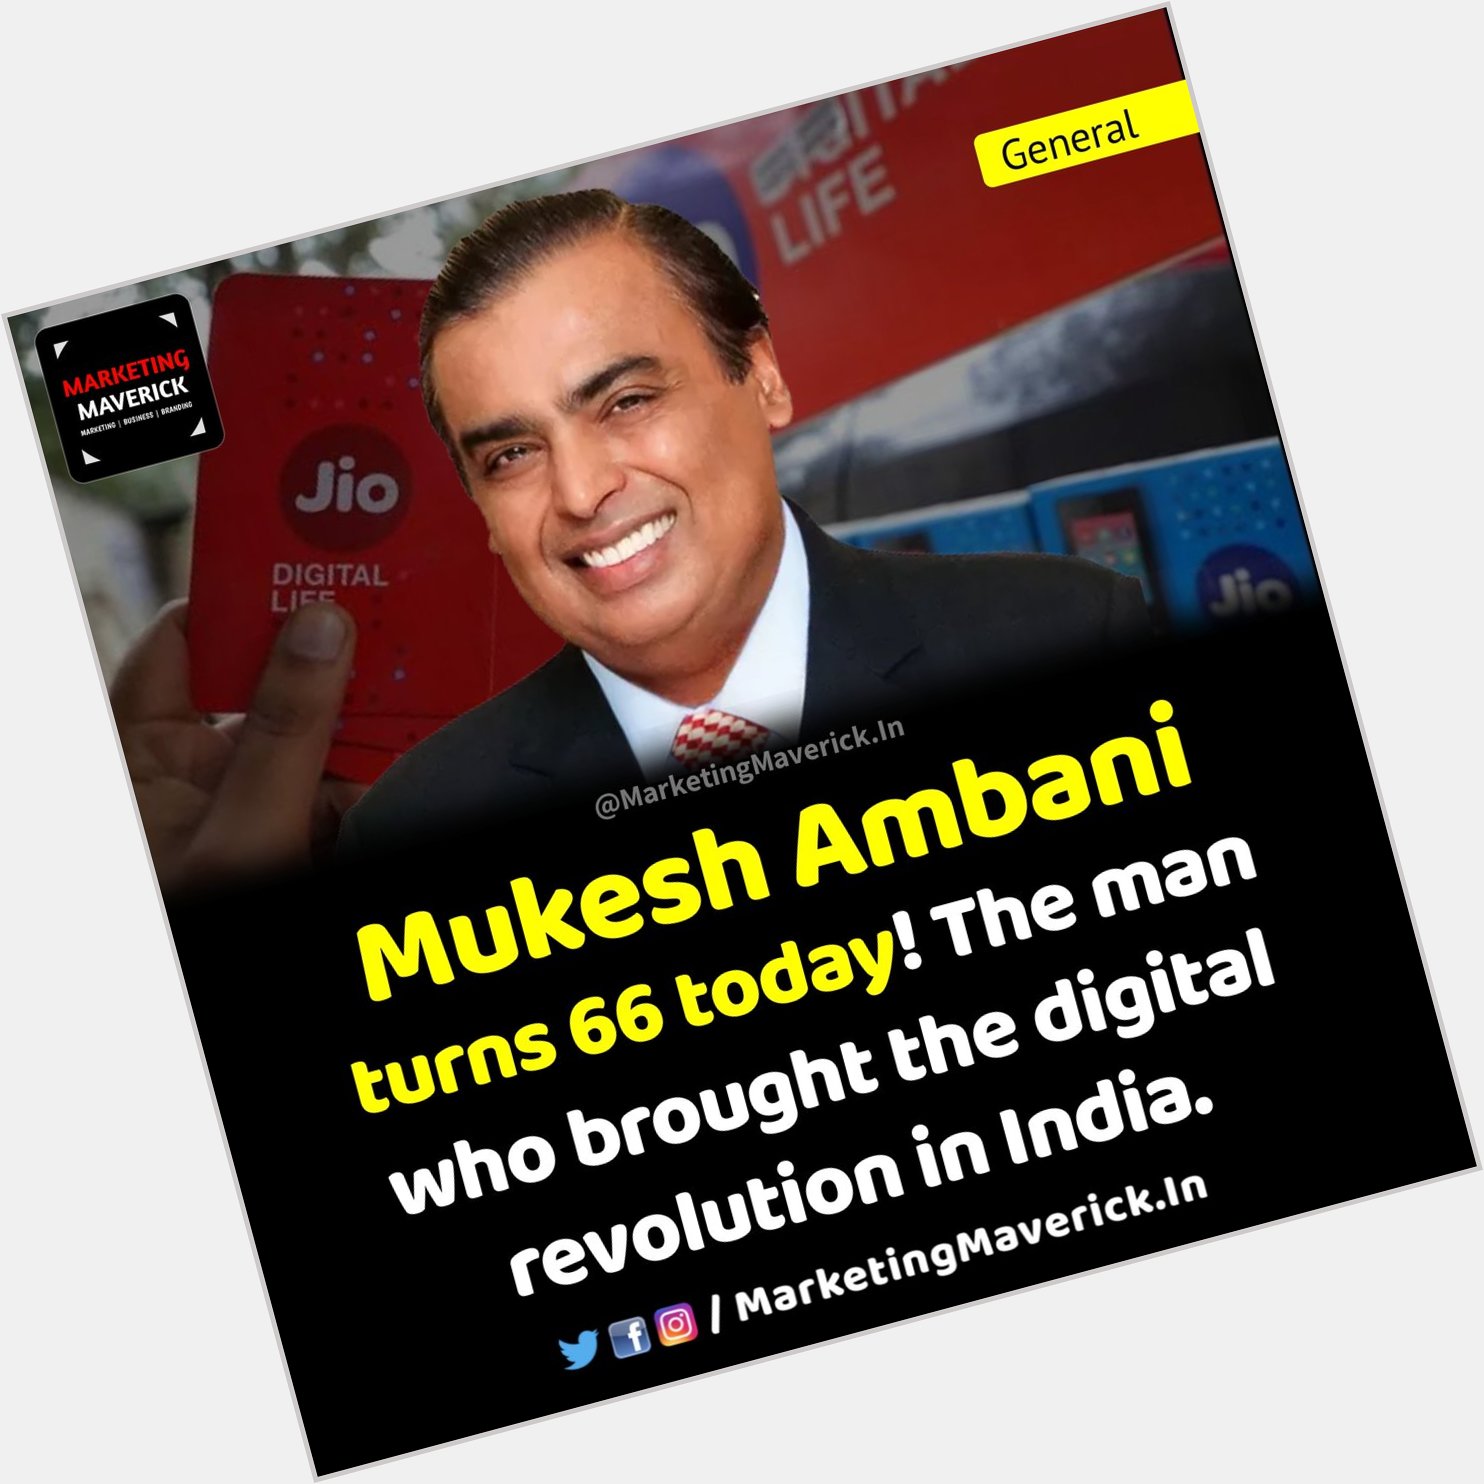 Happy Birthday Mukesh Ambani! The man who brought the digital revolution in India! 